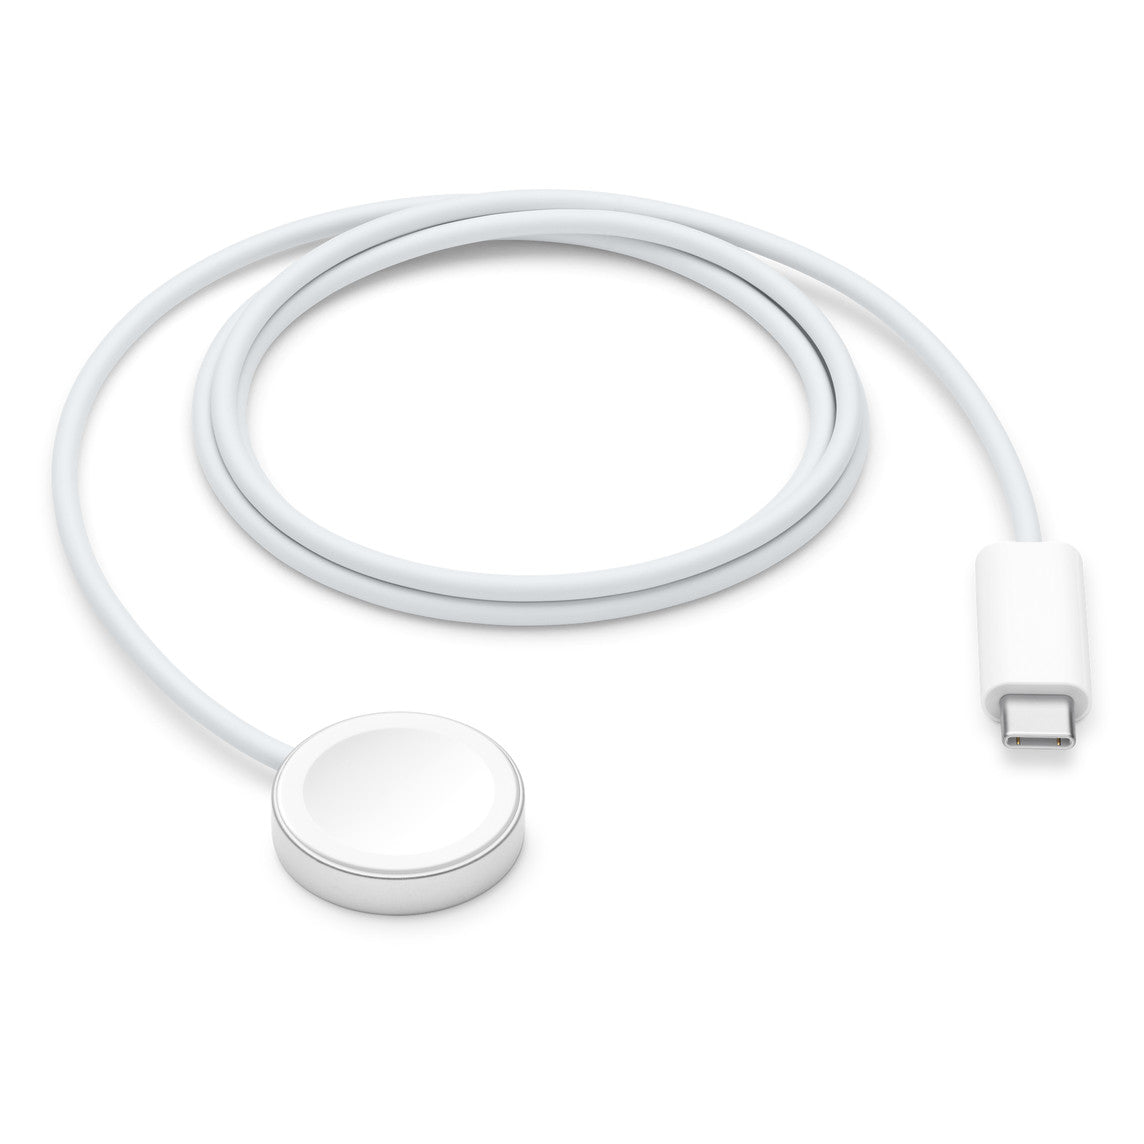 Cable de carga magnética a USB para Apple Watch (1M)